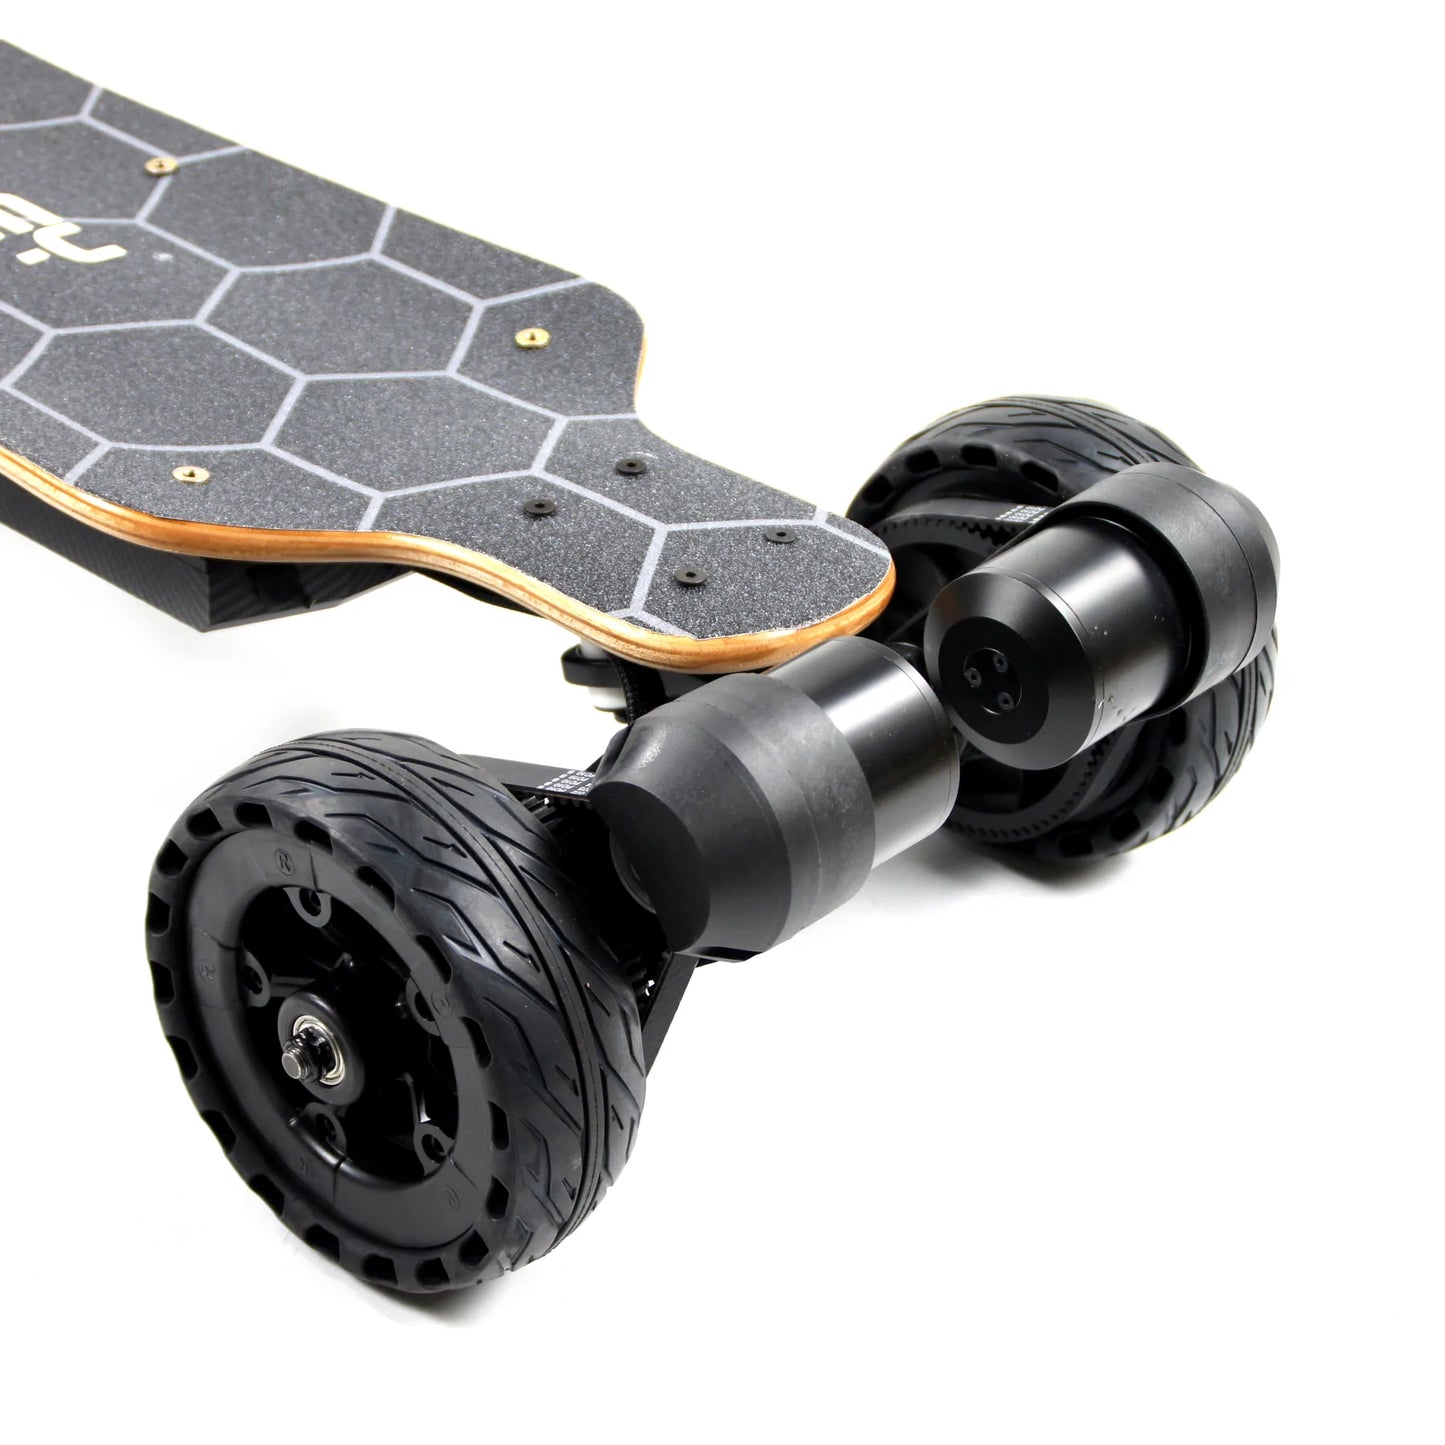 Raldey Bamboo V3S-AT All-Terrain Electric Skateboard